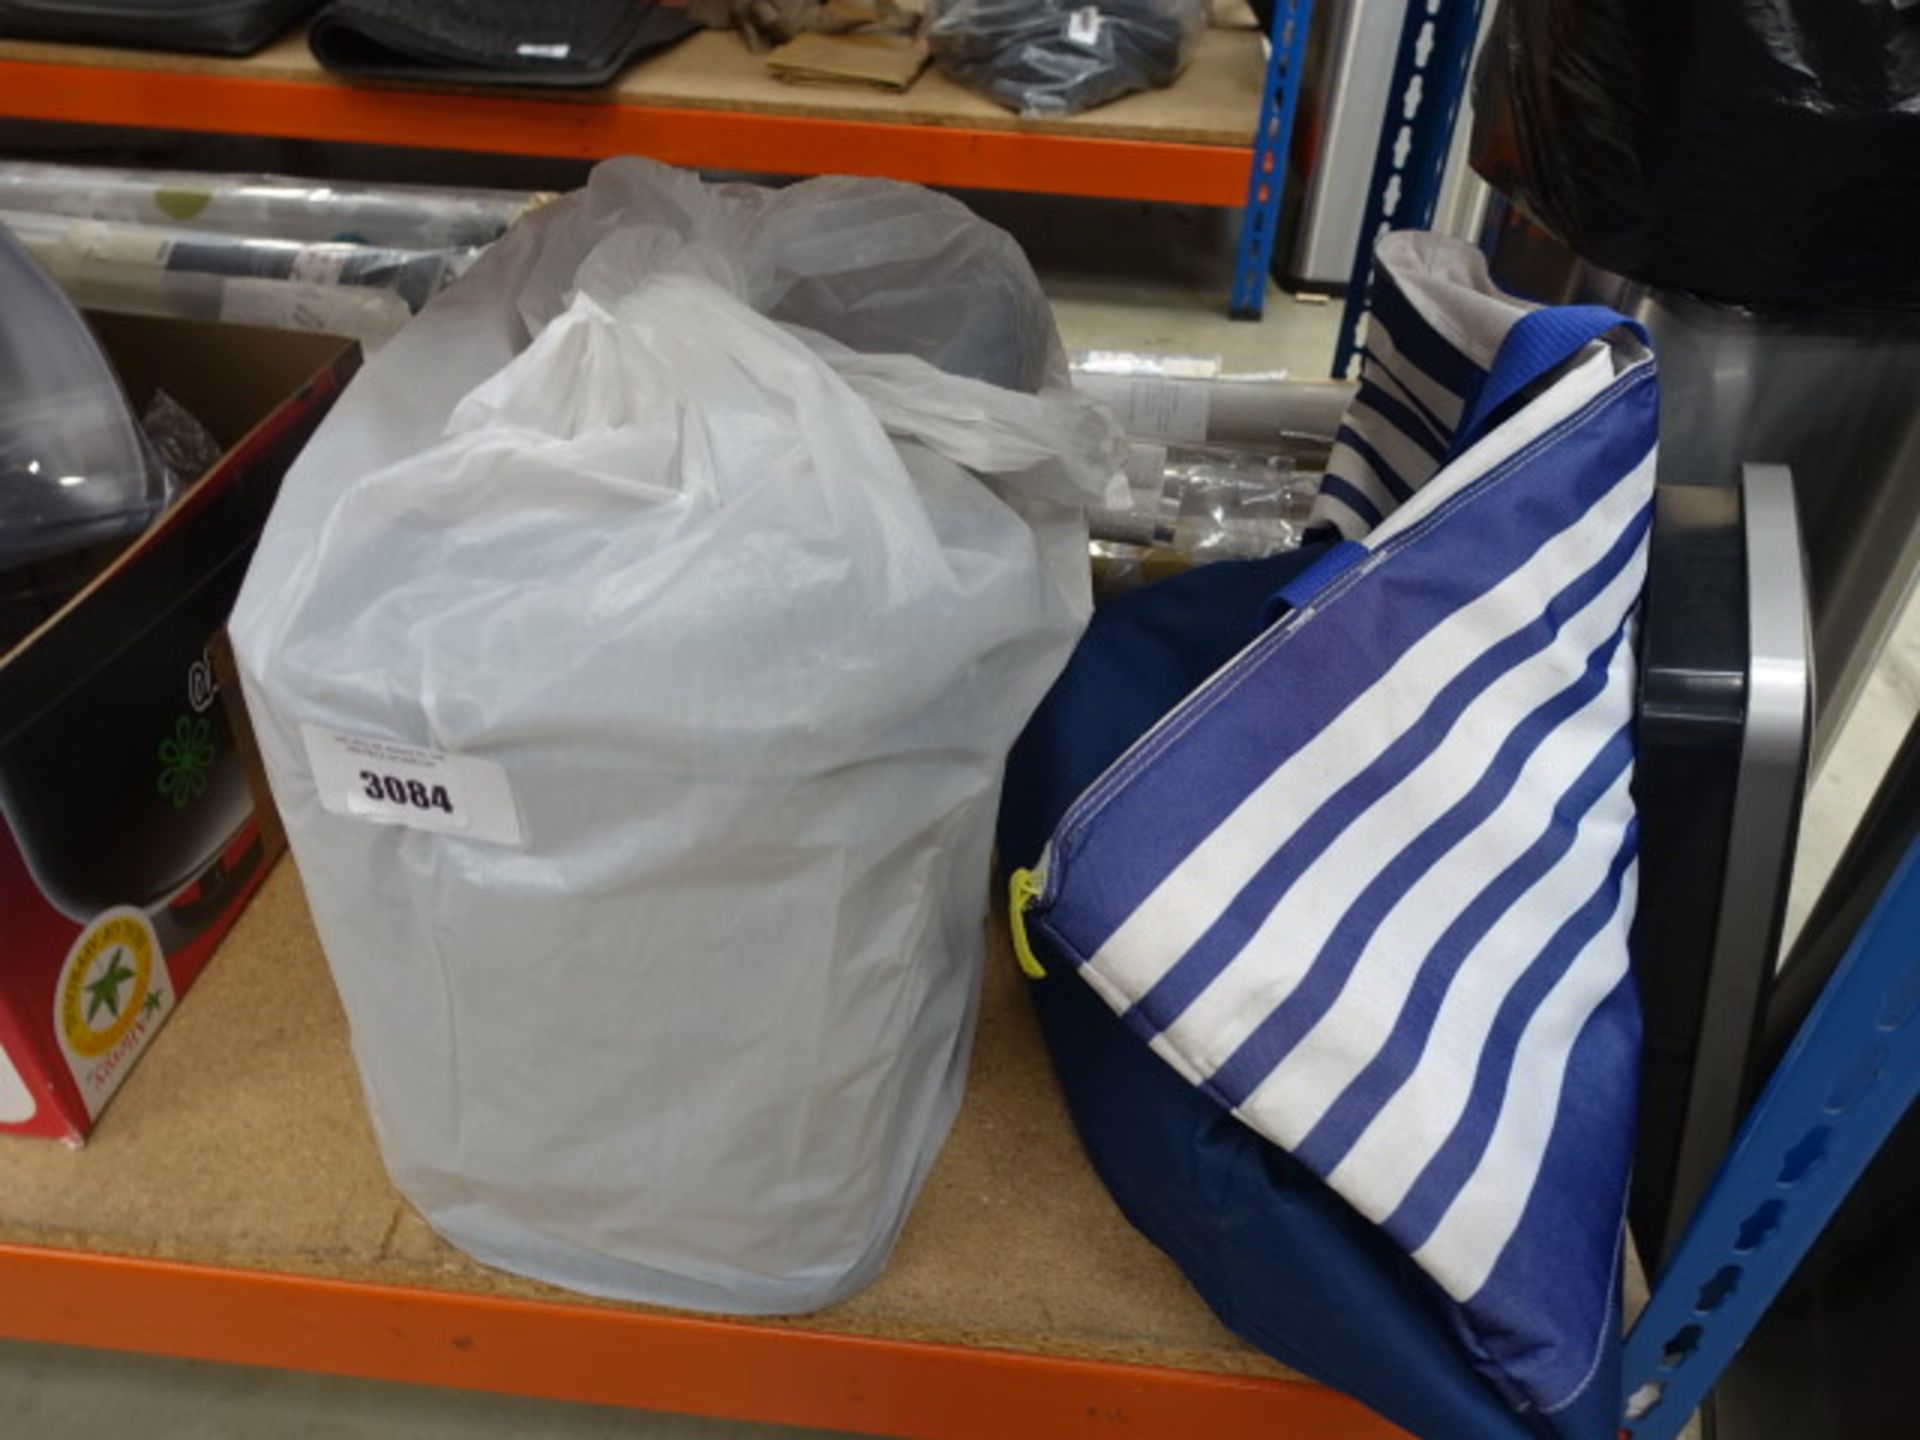 Keep cool shopping bag plus 2 mini stainless steel pedal bin